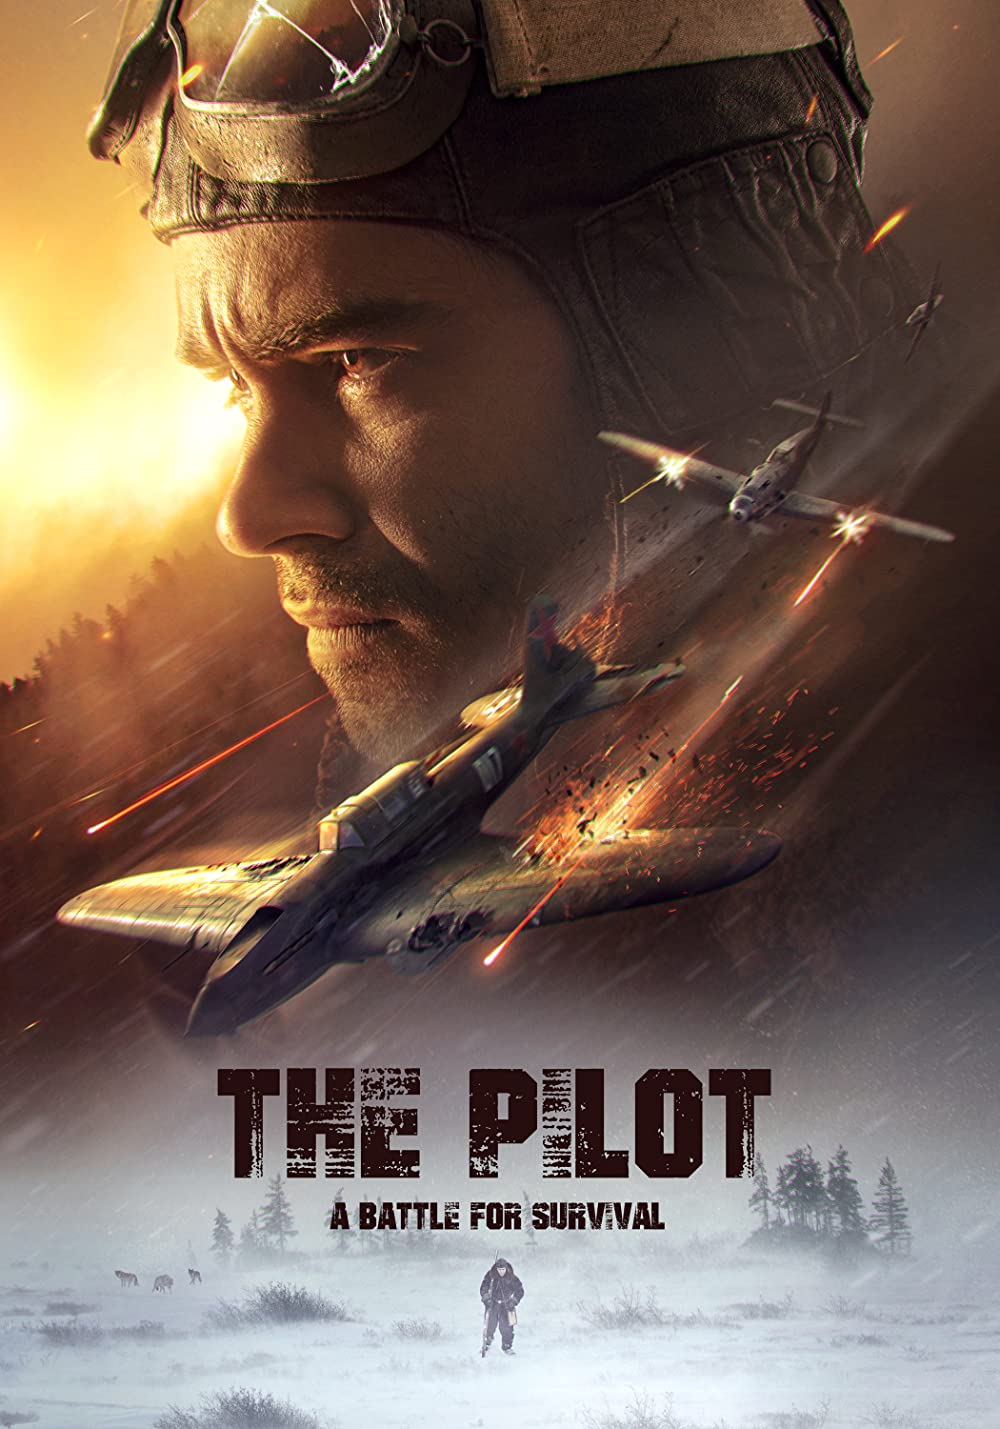 Cuộc chiến Sống Còn – The Pilot. A Battle For Survival (2021) Full HD Vietsub